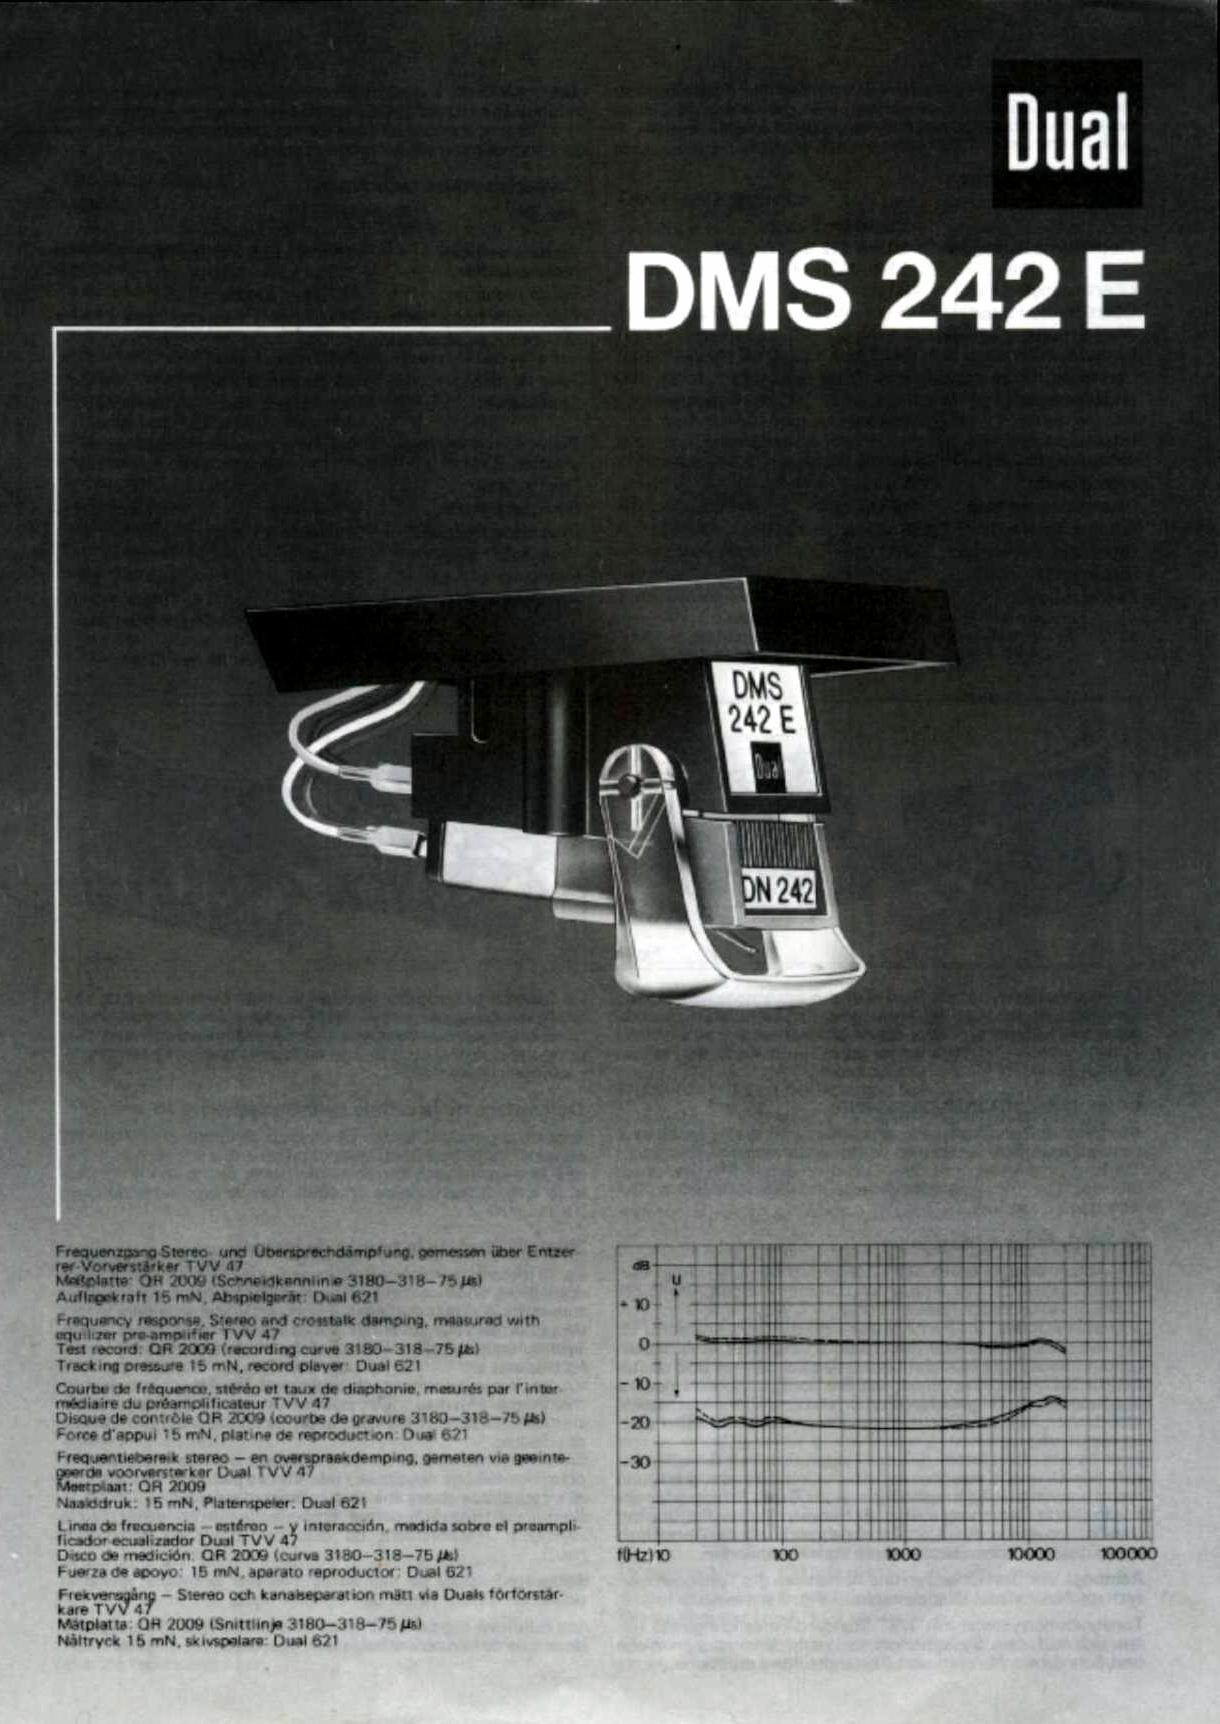 Dual DMS-242 E-Manual-1981.jpg